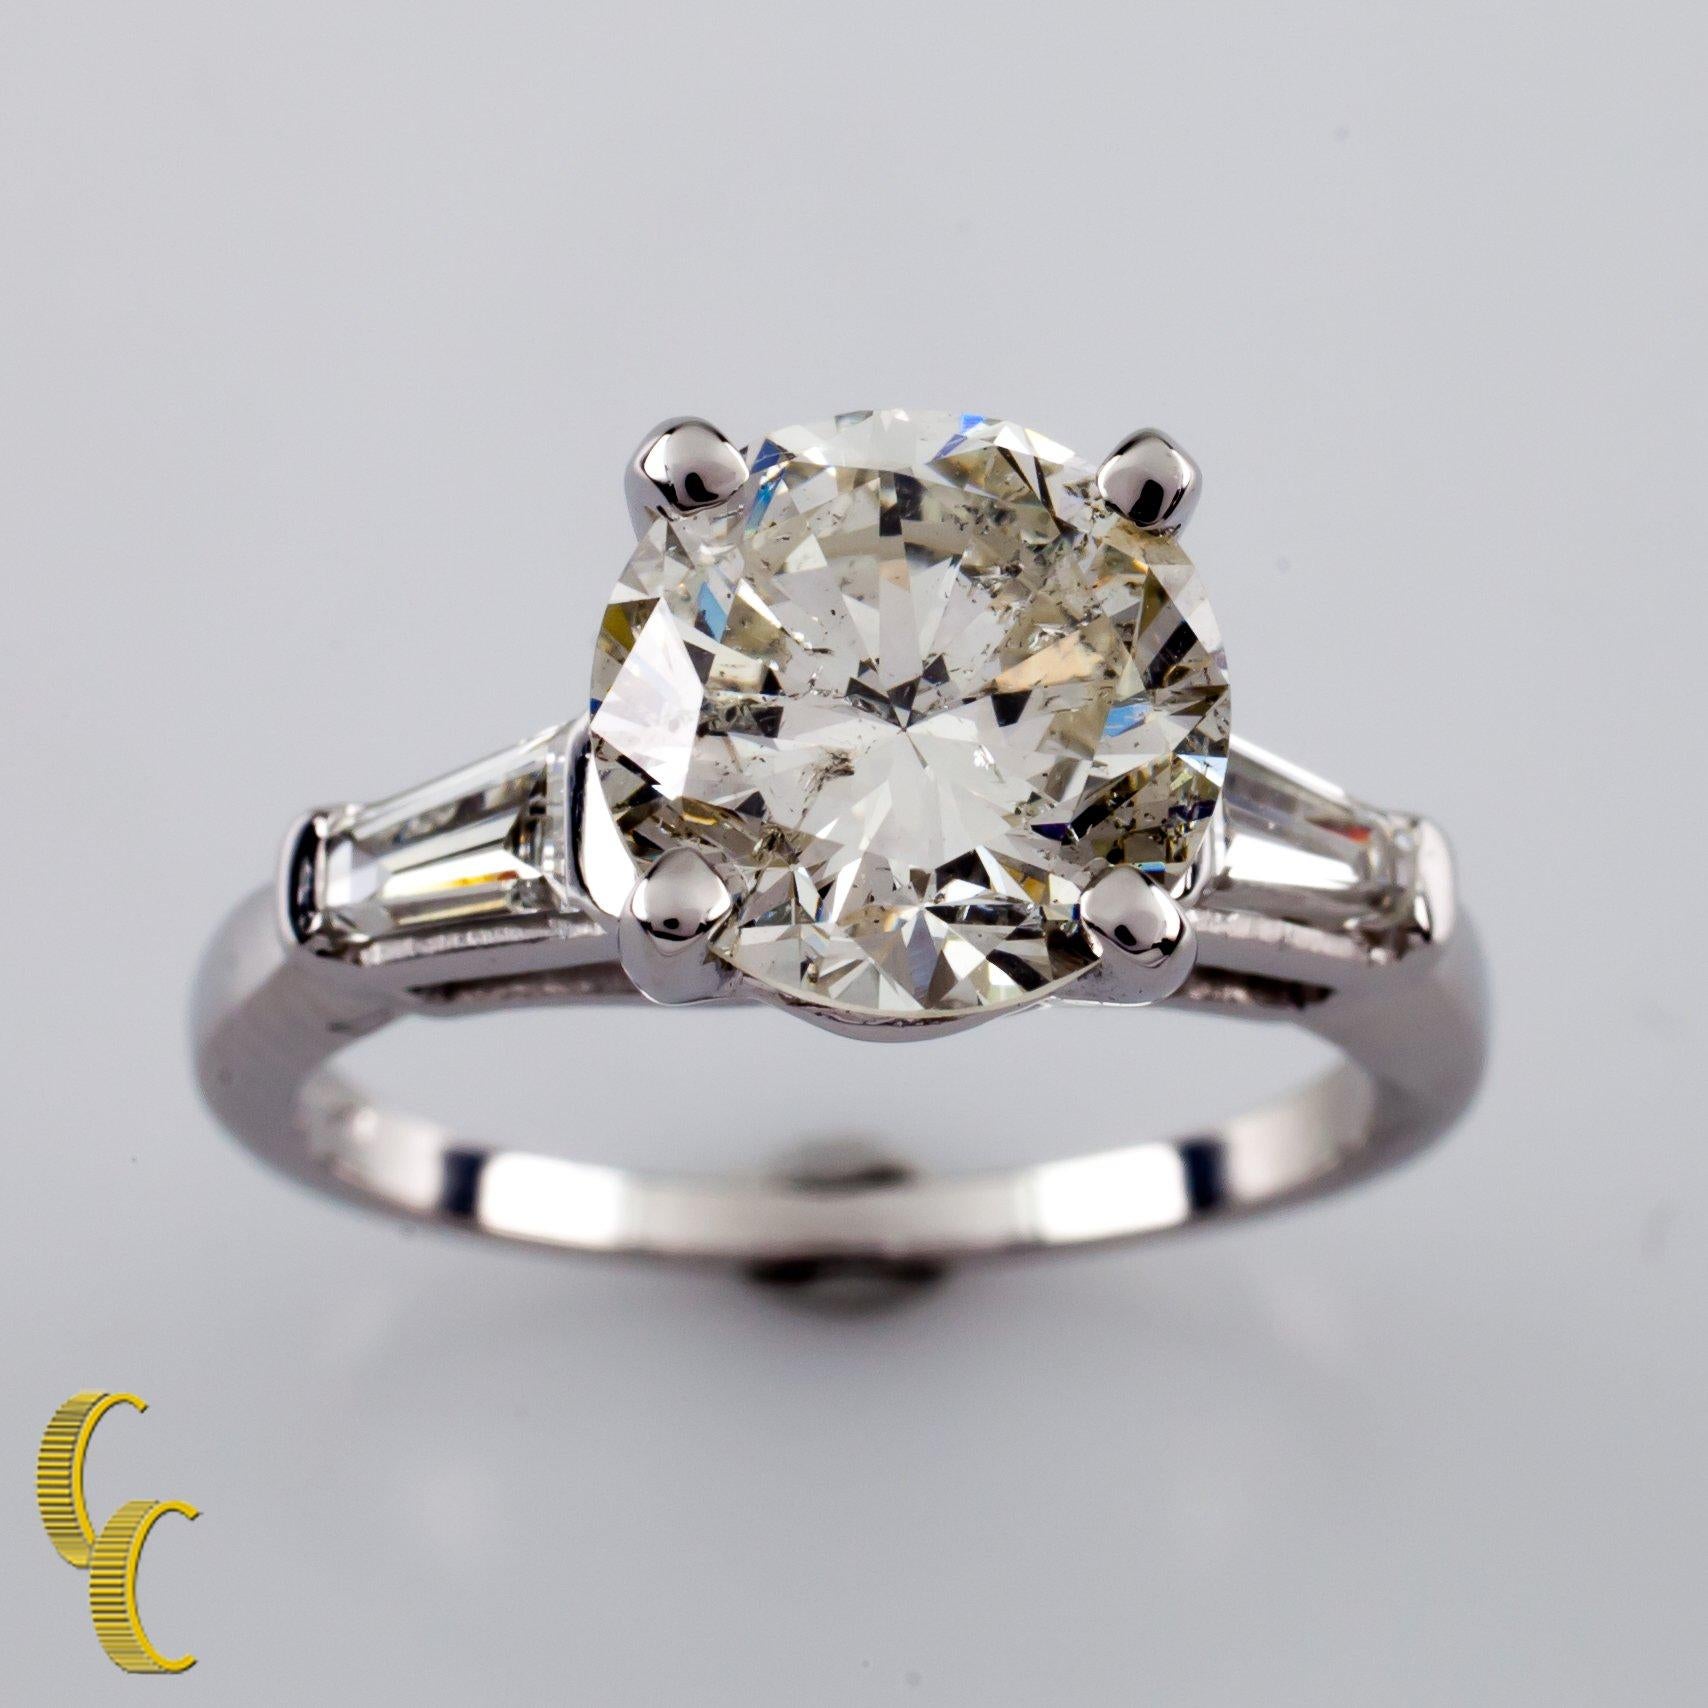 18 karat white gold setting 
Ring size = 6.25
Diamond Center Stone Specs:
Diamond Carat weight: 3.00 carats
Diamond Color Grade: I
Diamond Clarity Grade: I1
Total Mass: 6.5 grams